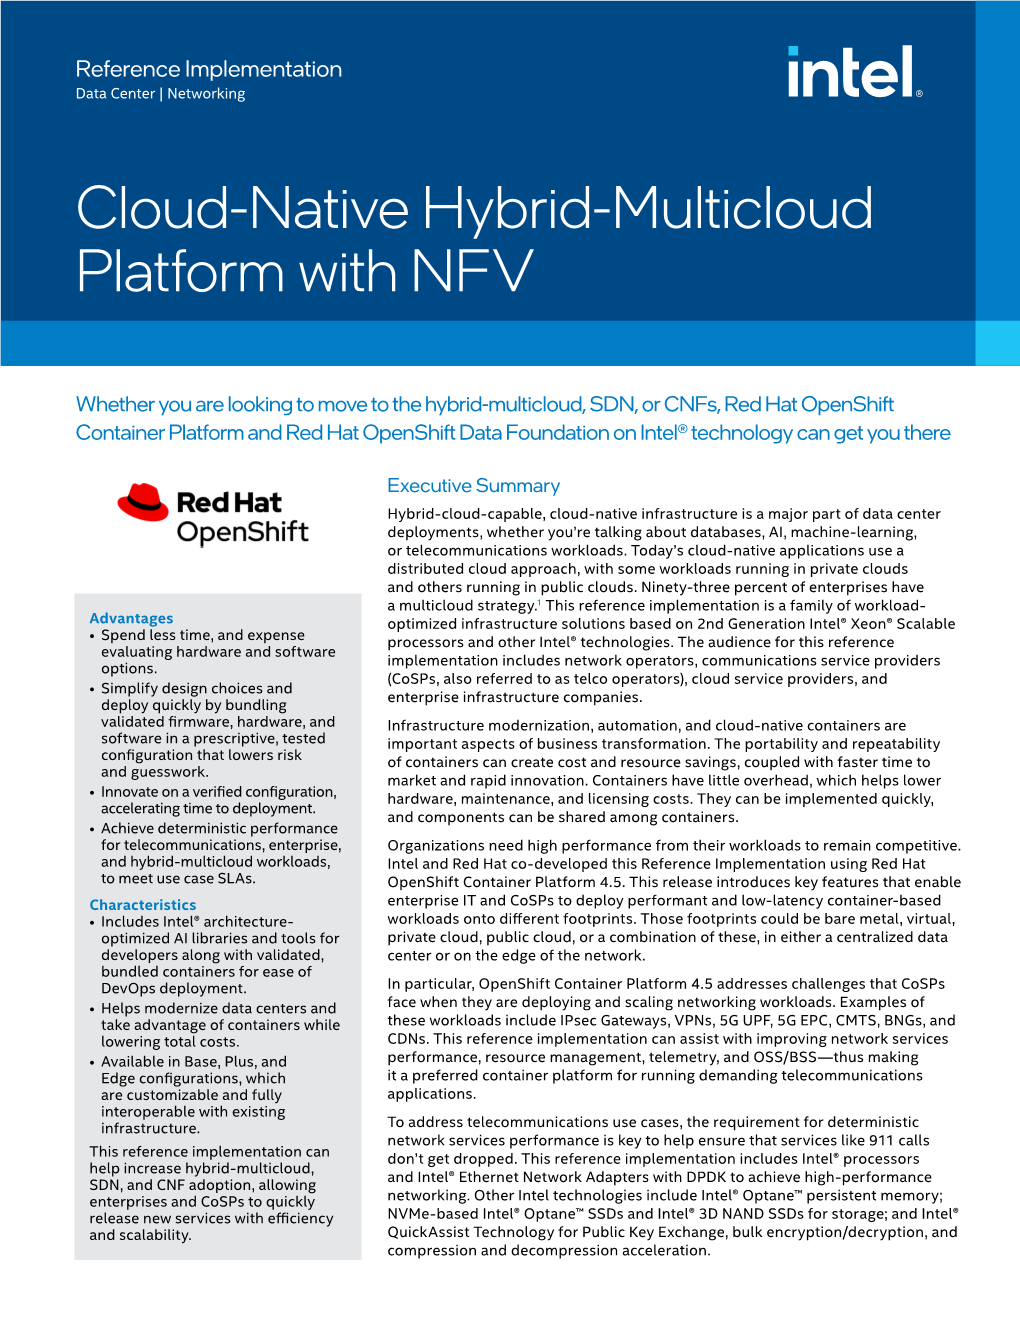 Cloud-Native Hybrid-Multicloud Platform with NFV